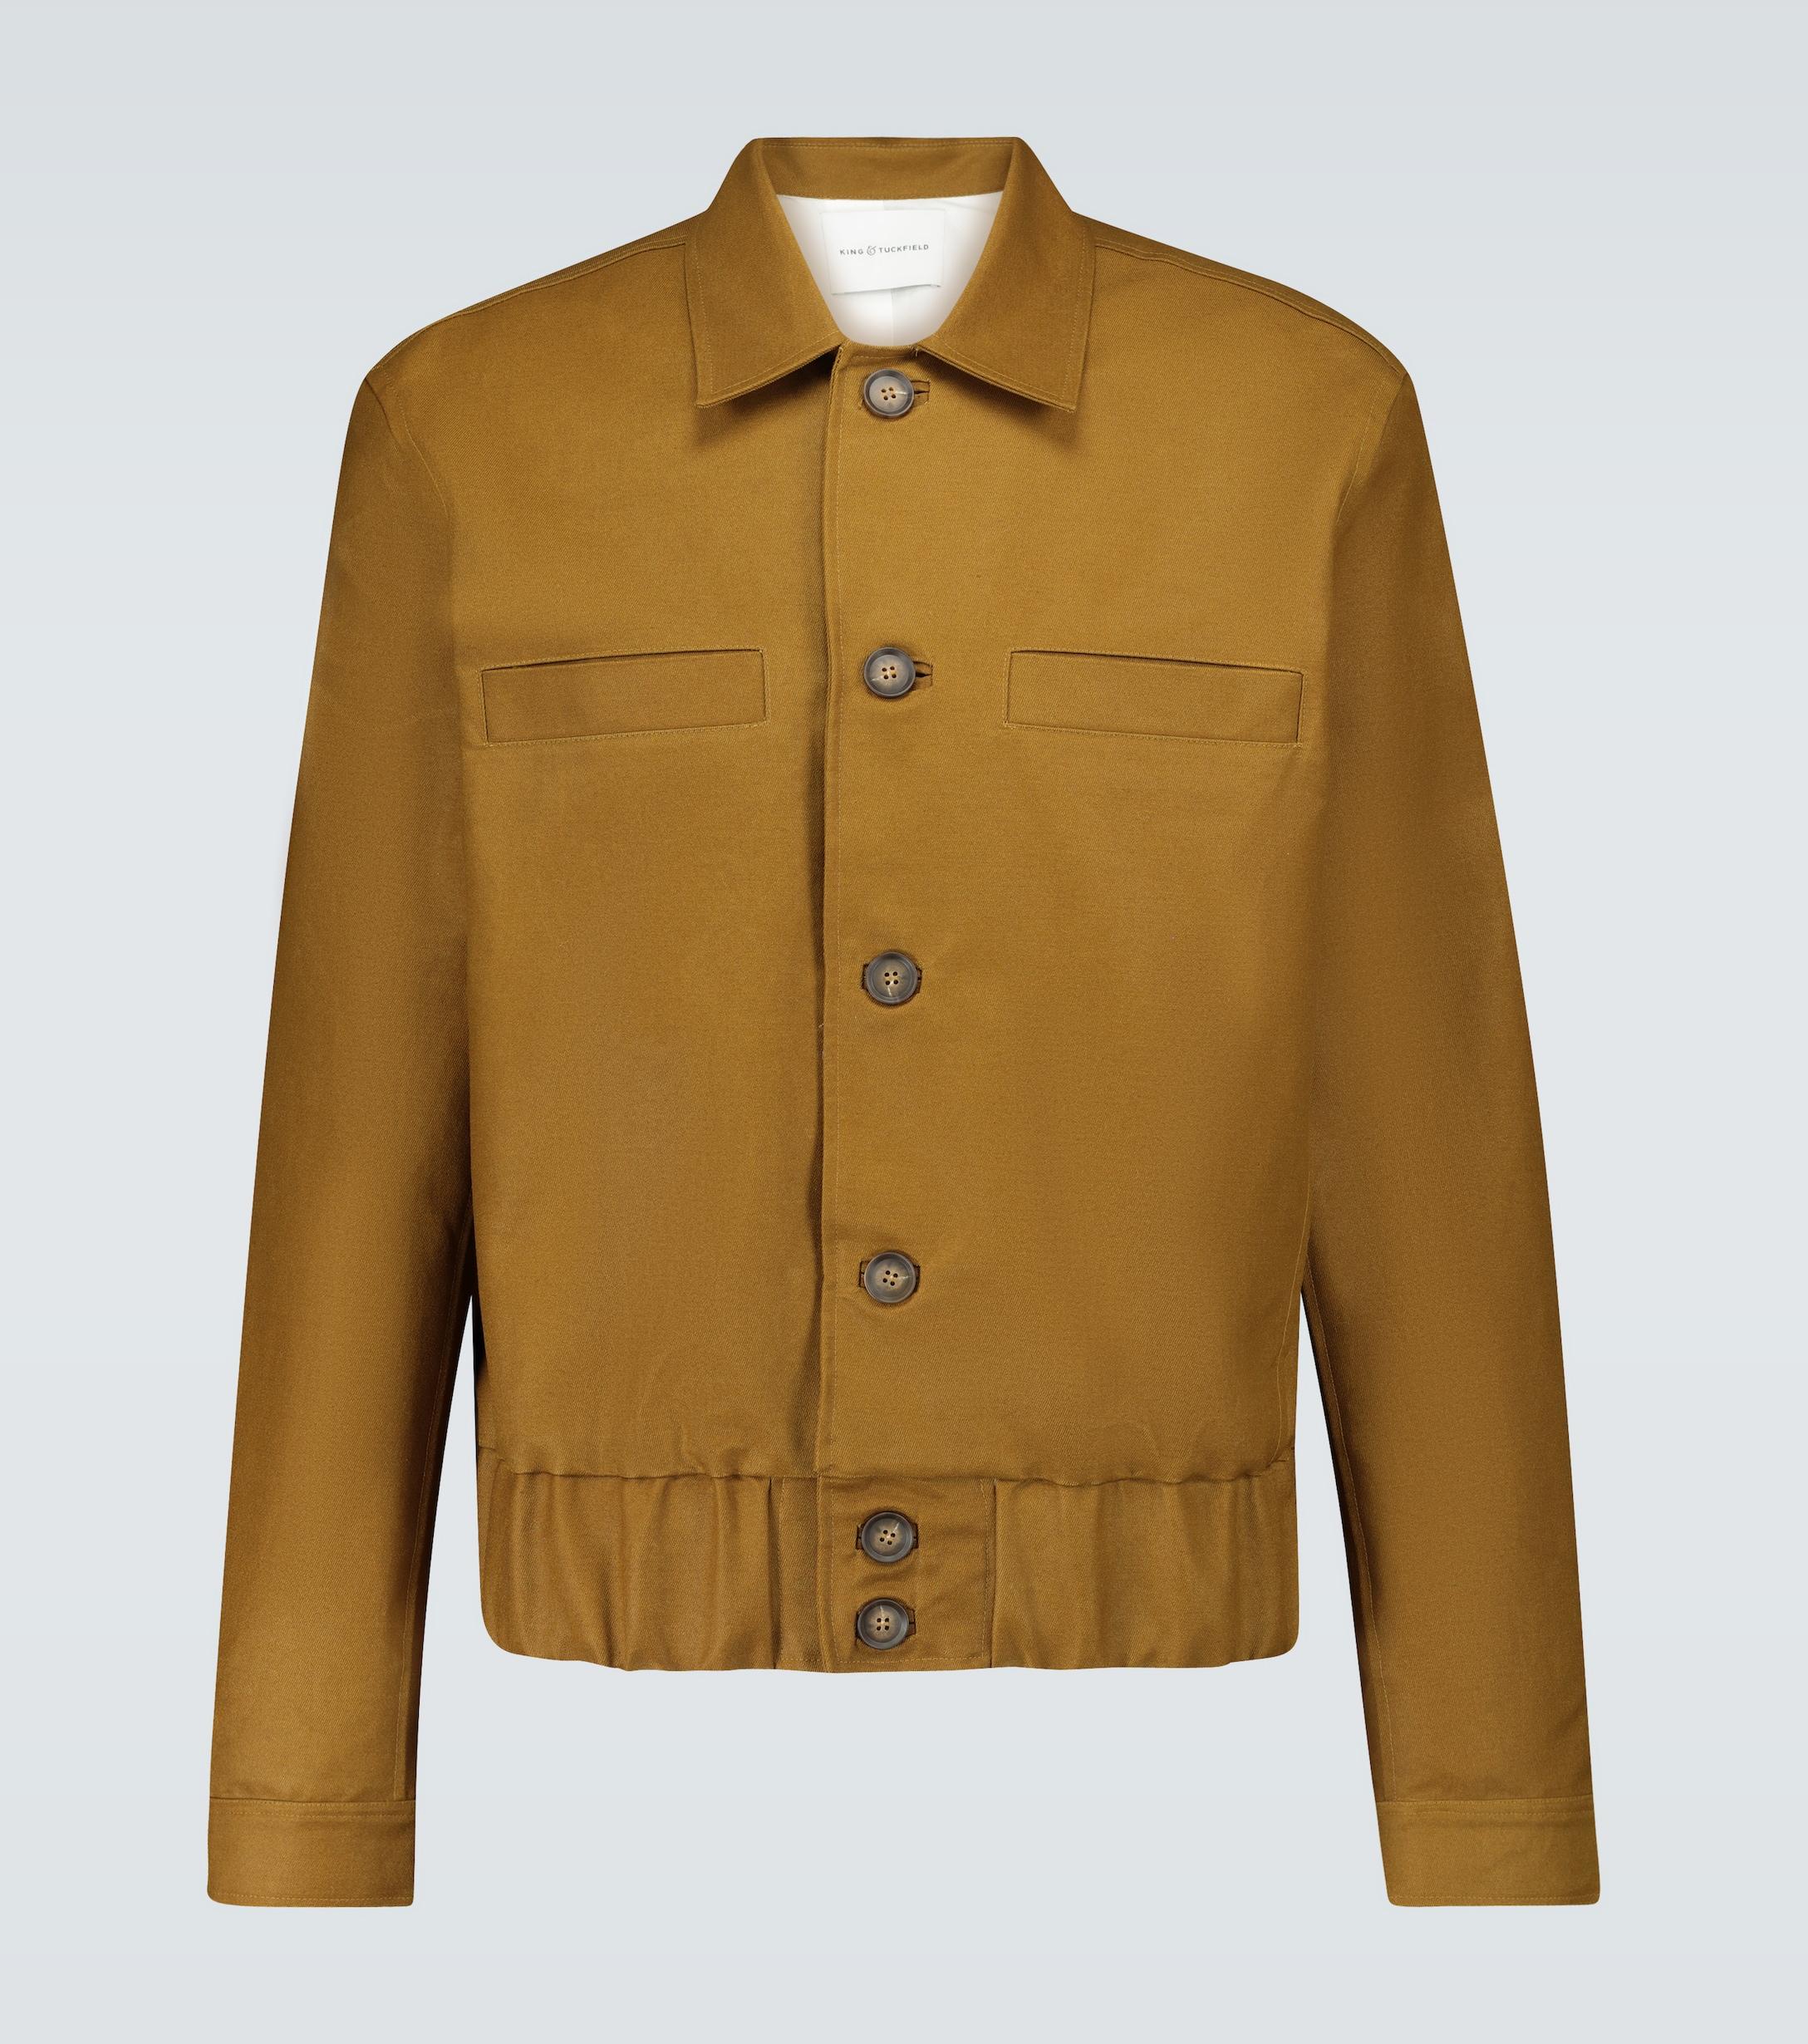 King & Tuckfield Cotton Harrington Jacket in Brown for Men - Lyst